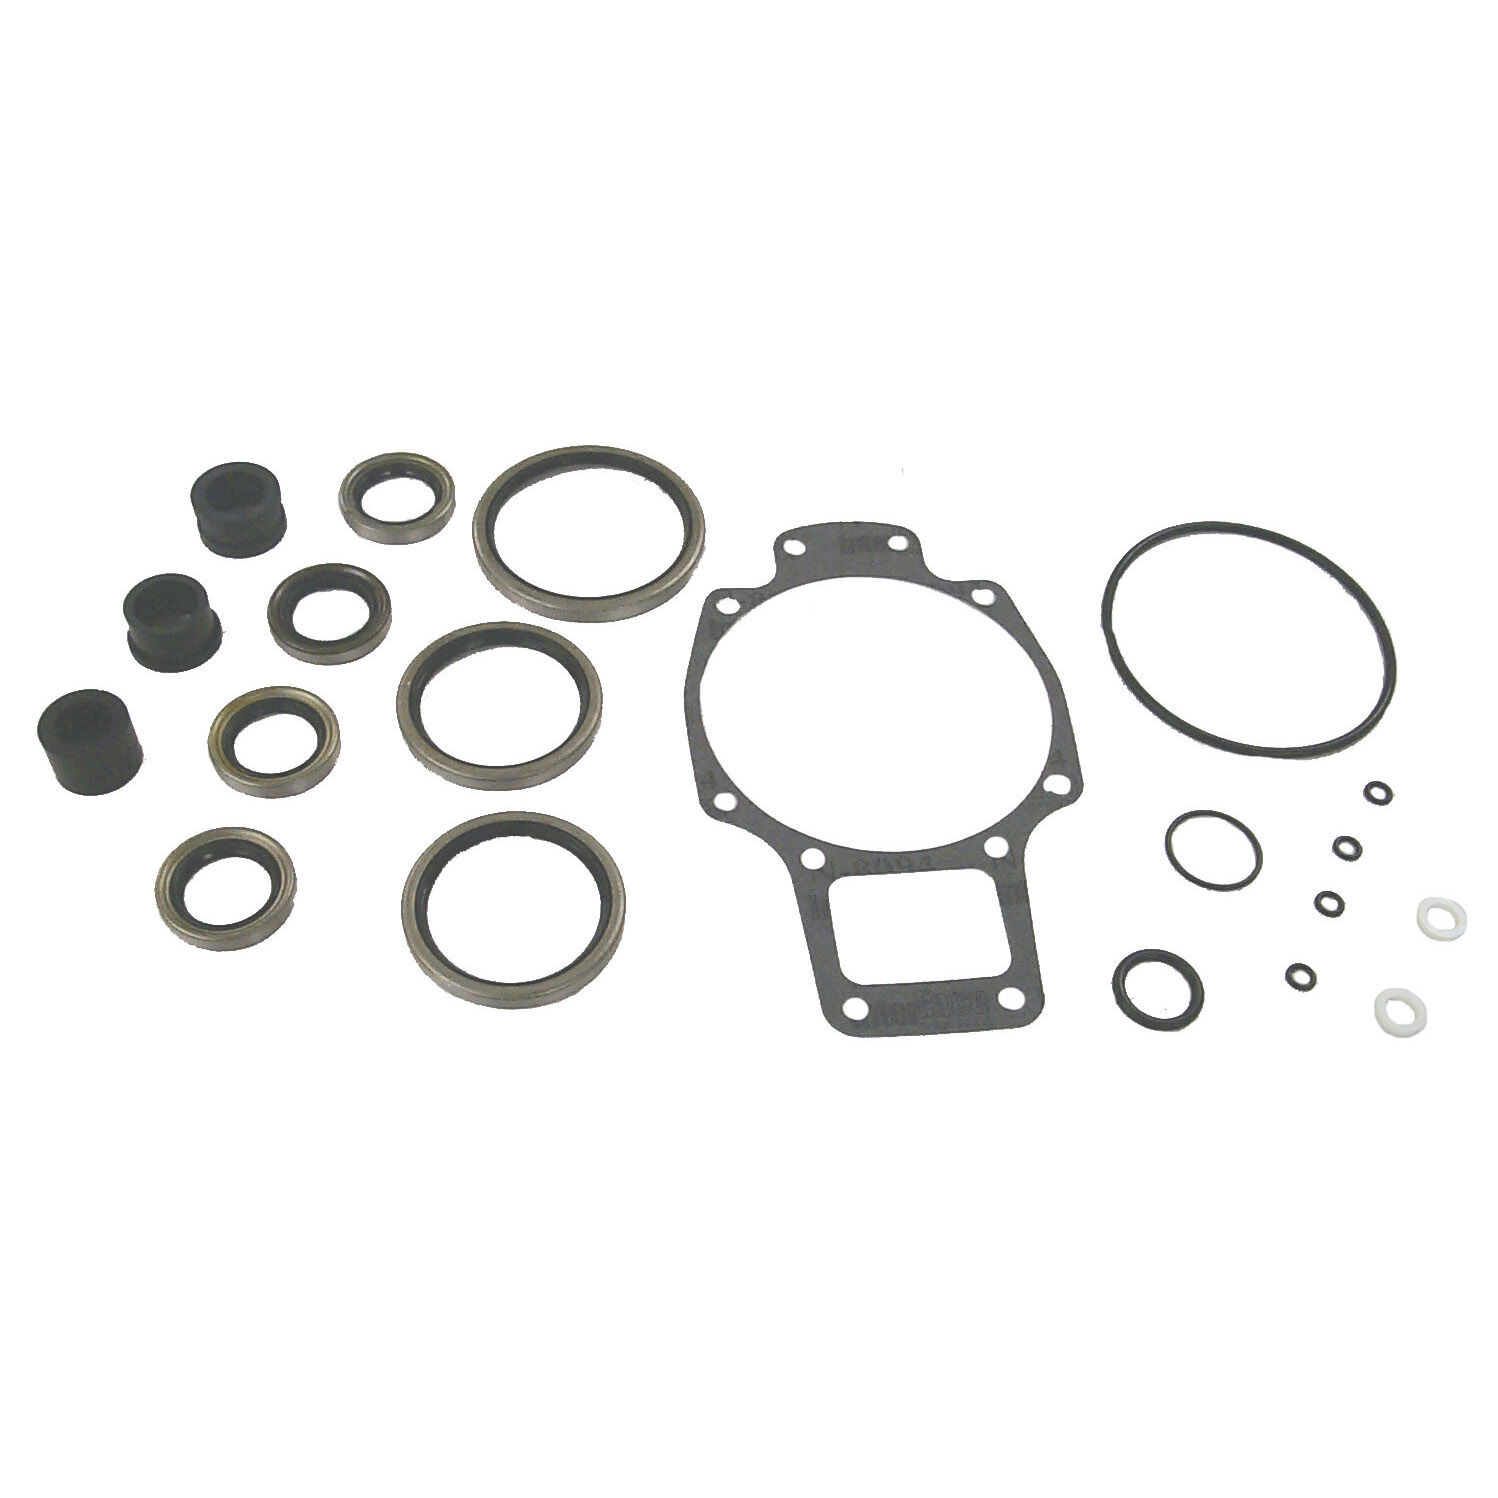 Sierra Lower Unit Seal Kit For OMC Engine, Part #18-2663